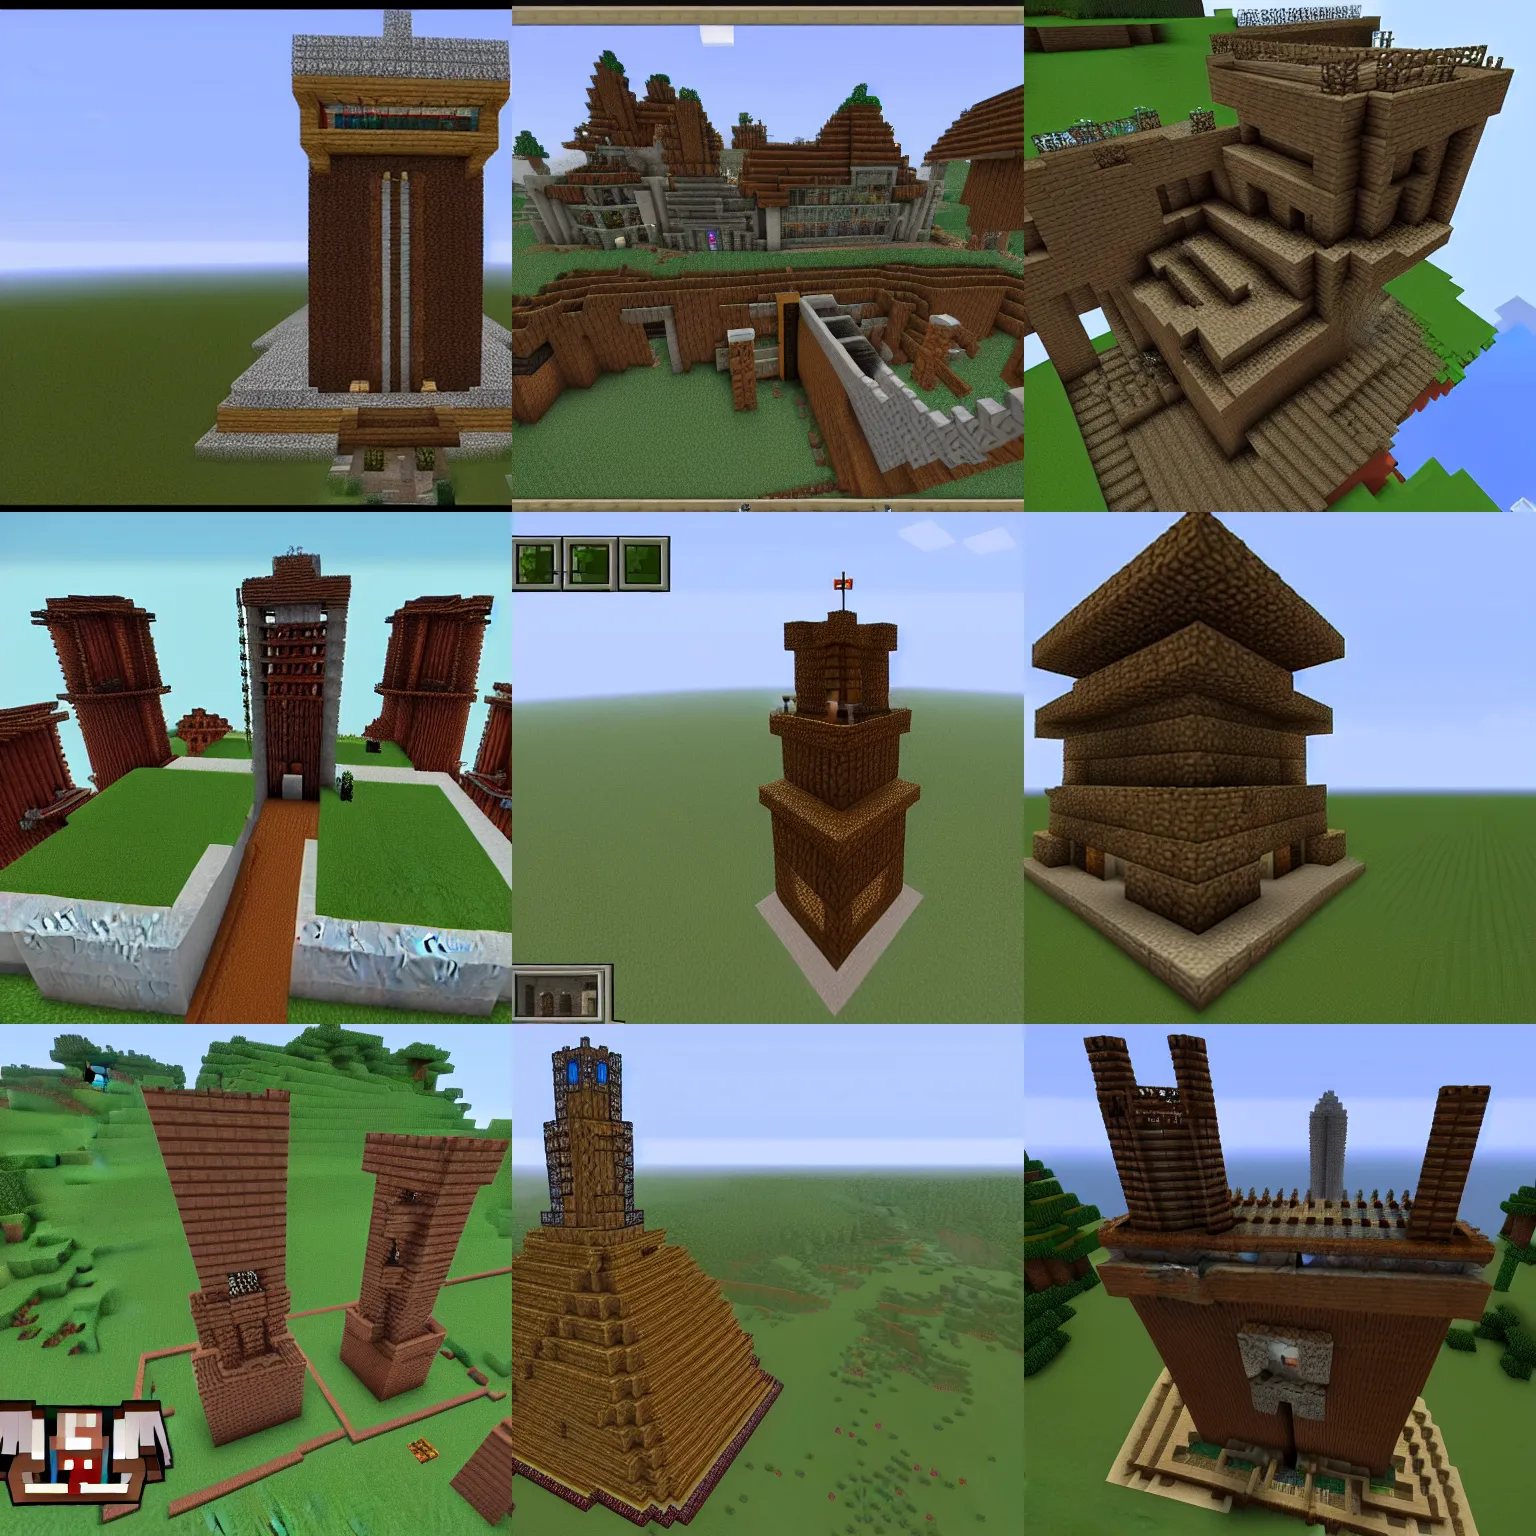 Prompt: Minecraft watchtower builds, screenshot of medieval tower designs in Minecraft